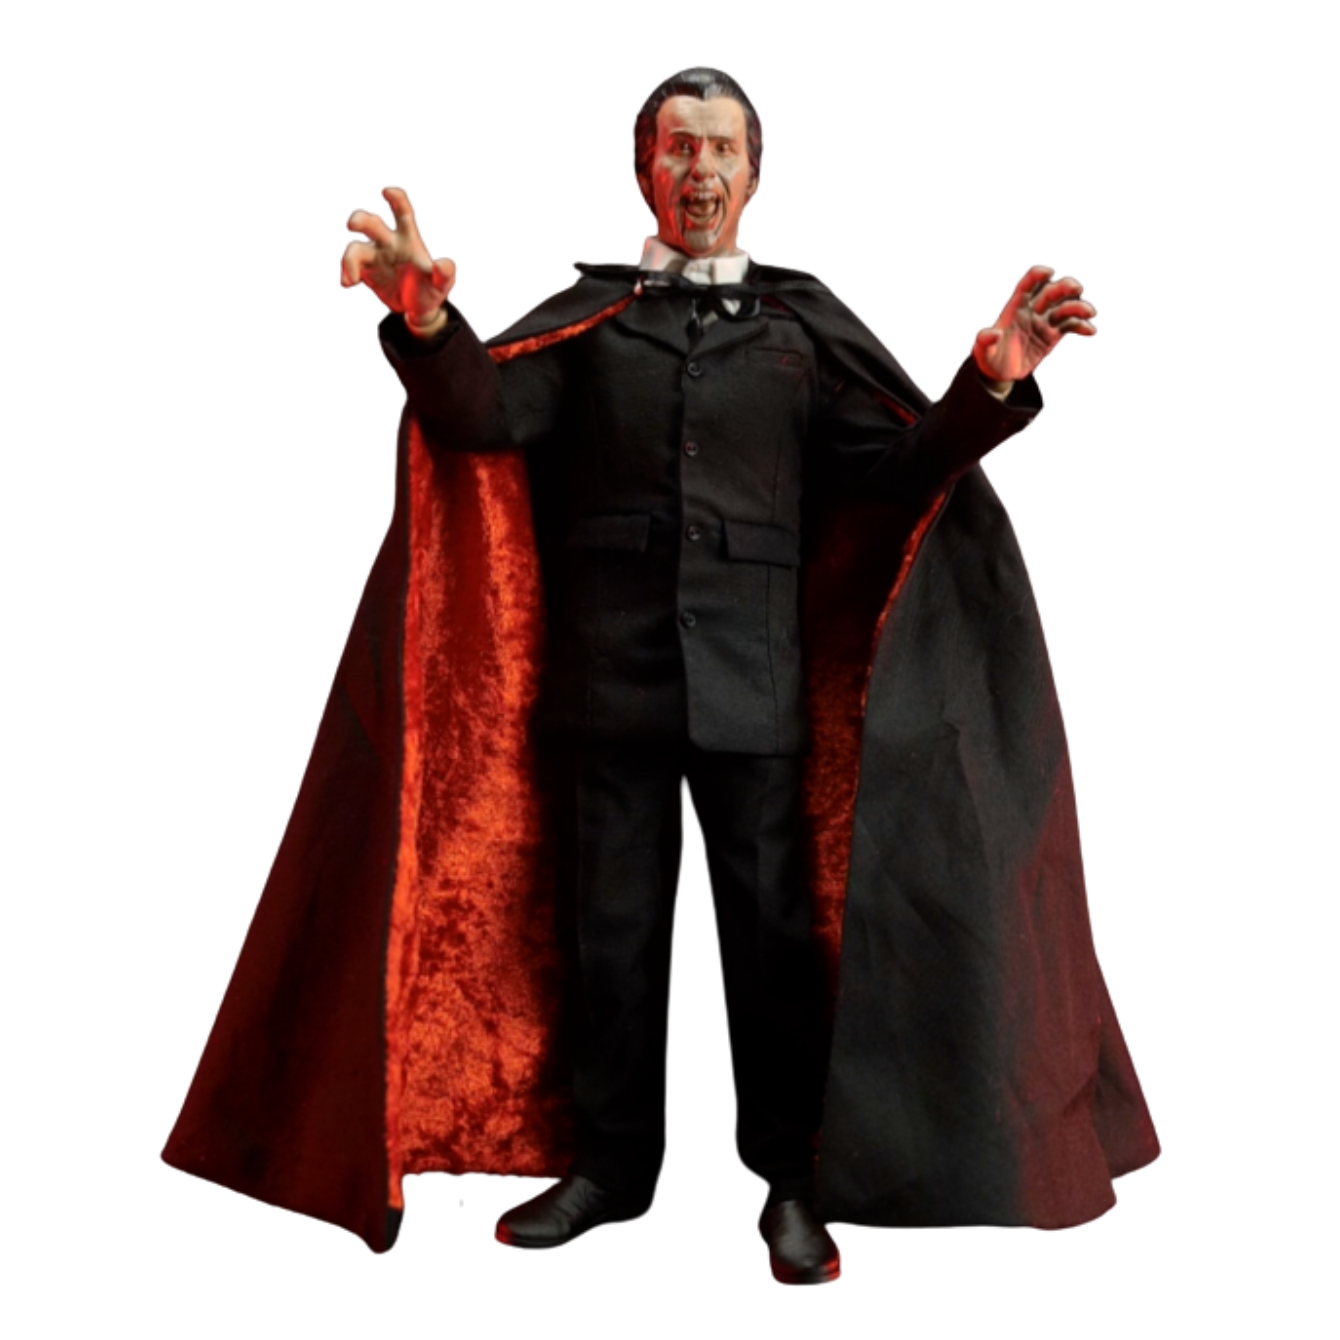 Hammer Horror - Dracula Prince of Darkness - Dracula 1:6 Scale Figure